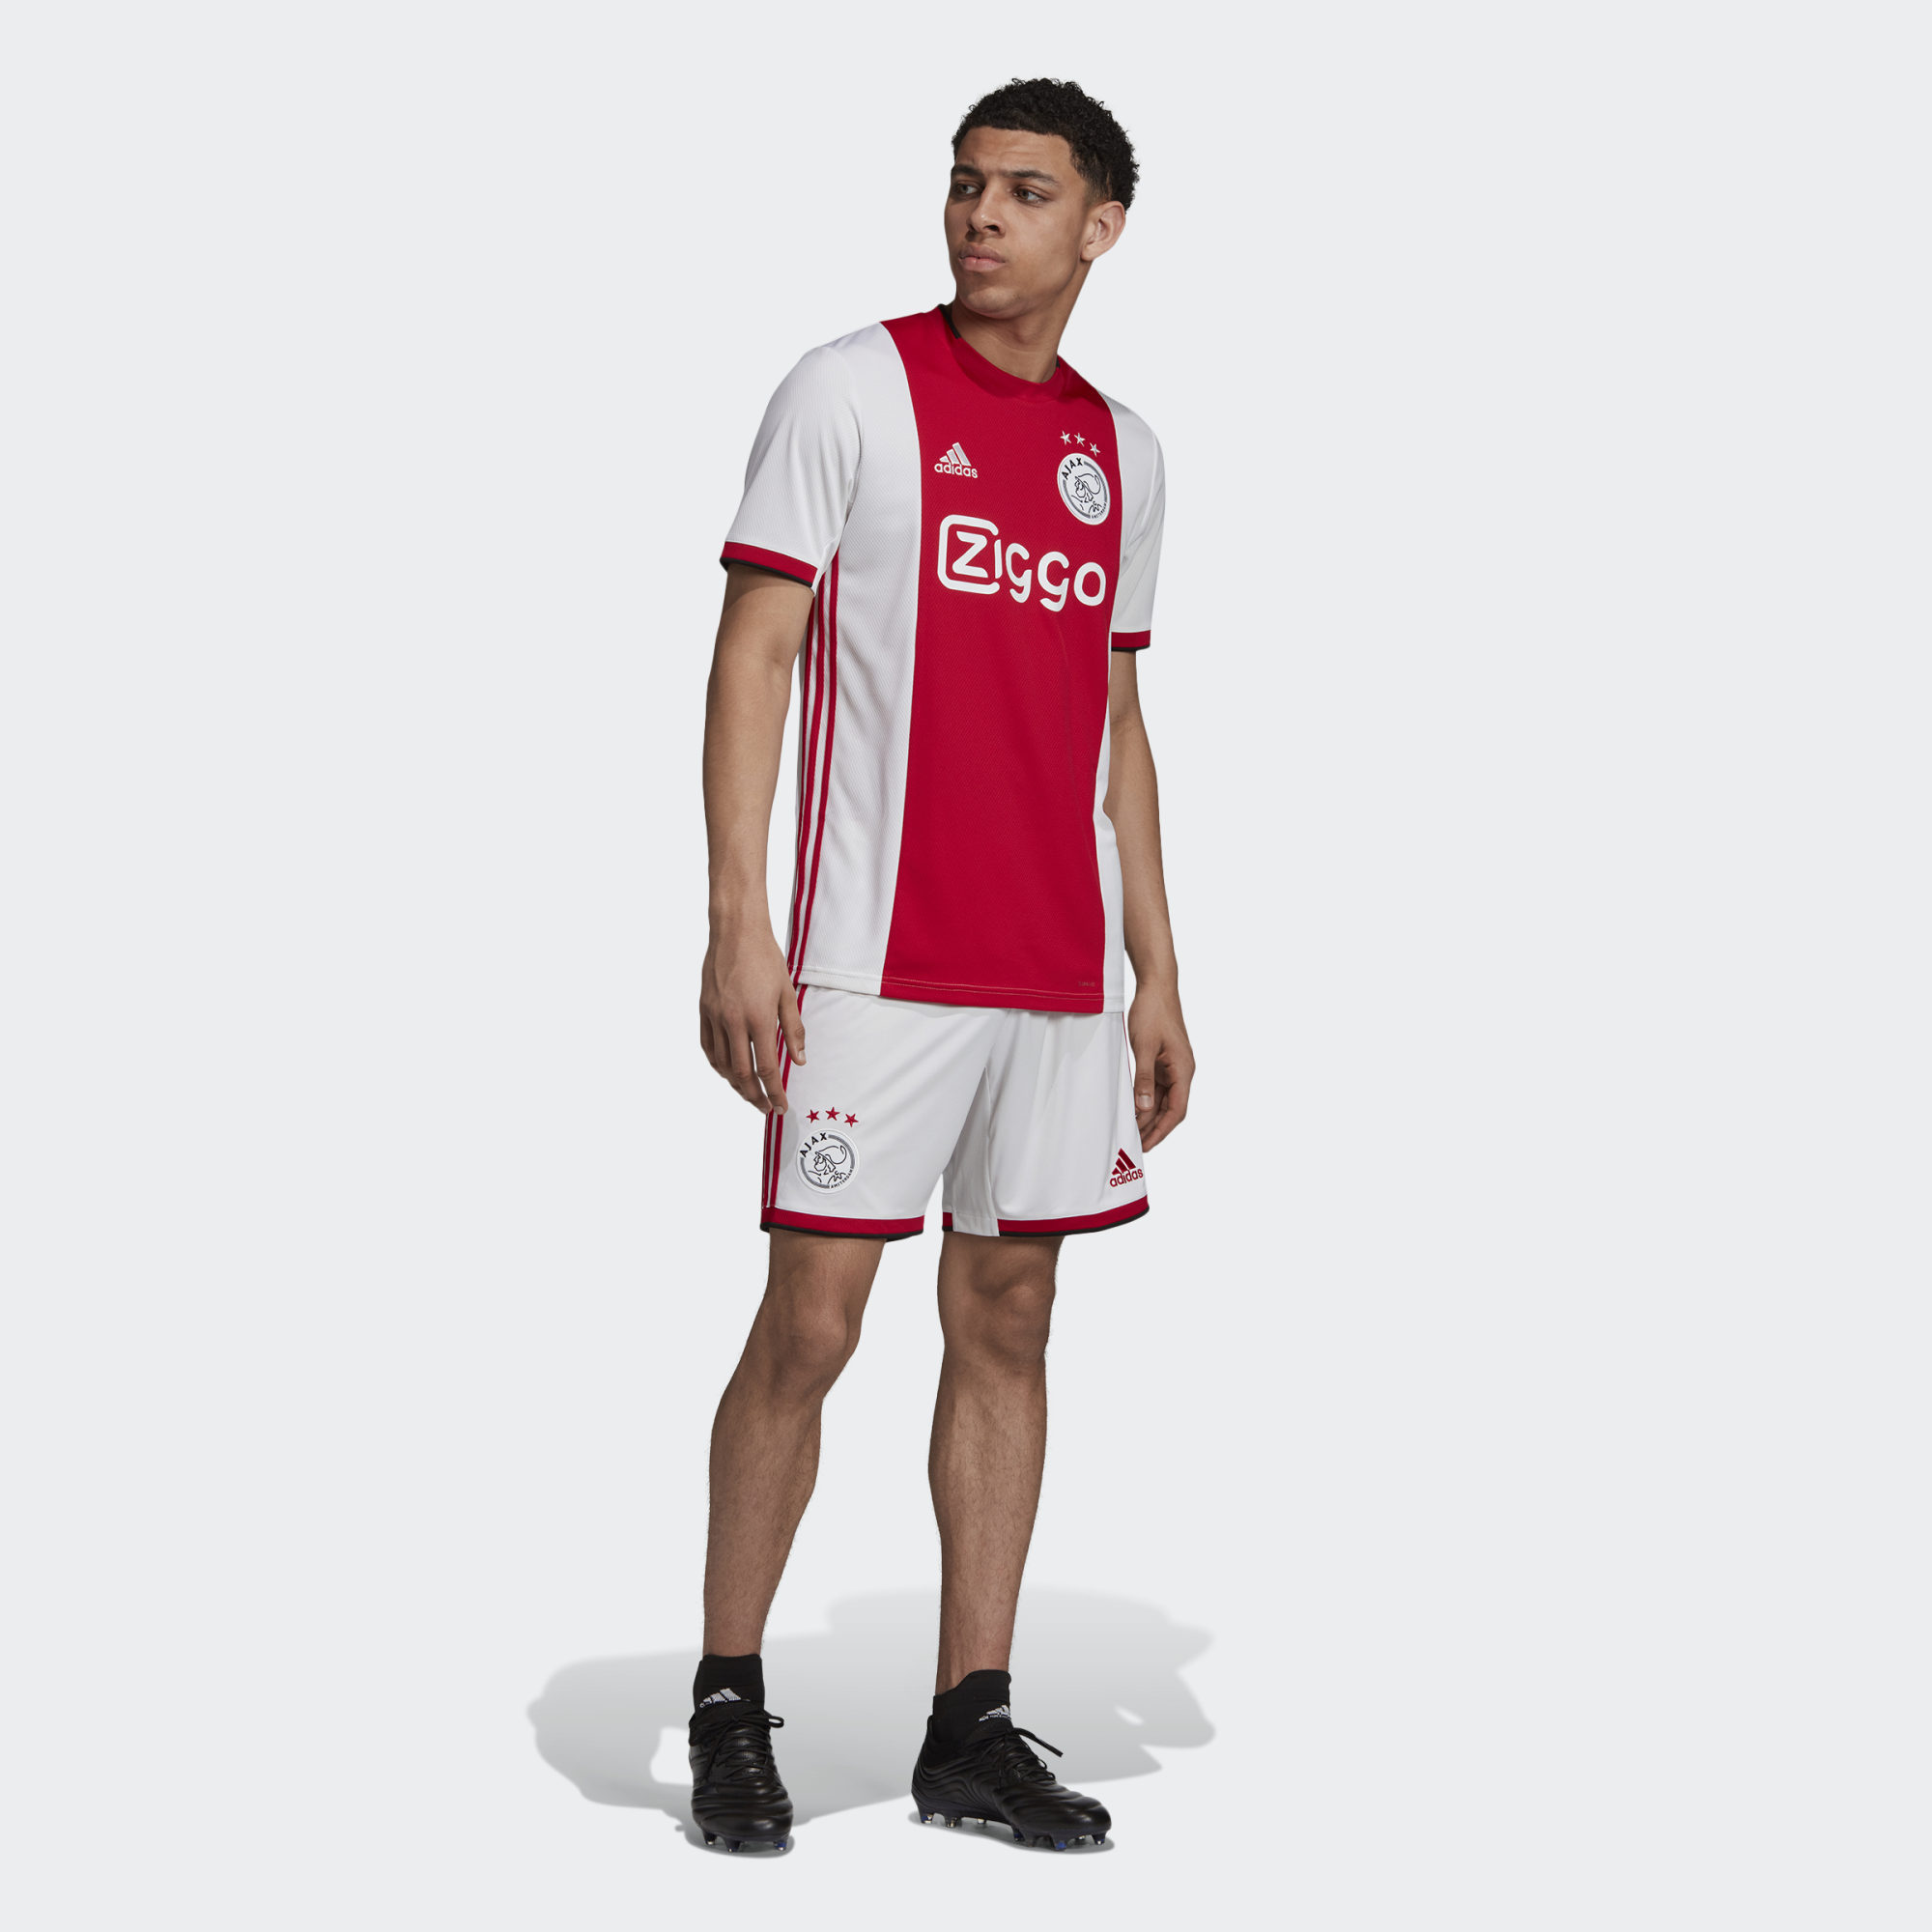 landinwaarts Extra beginsel Ajax 2019-20 Adidas Home Kit - Football Shirt Culture - Latest Football Kit  News and More